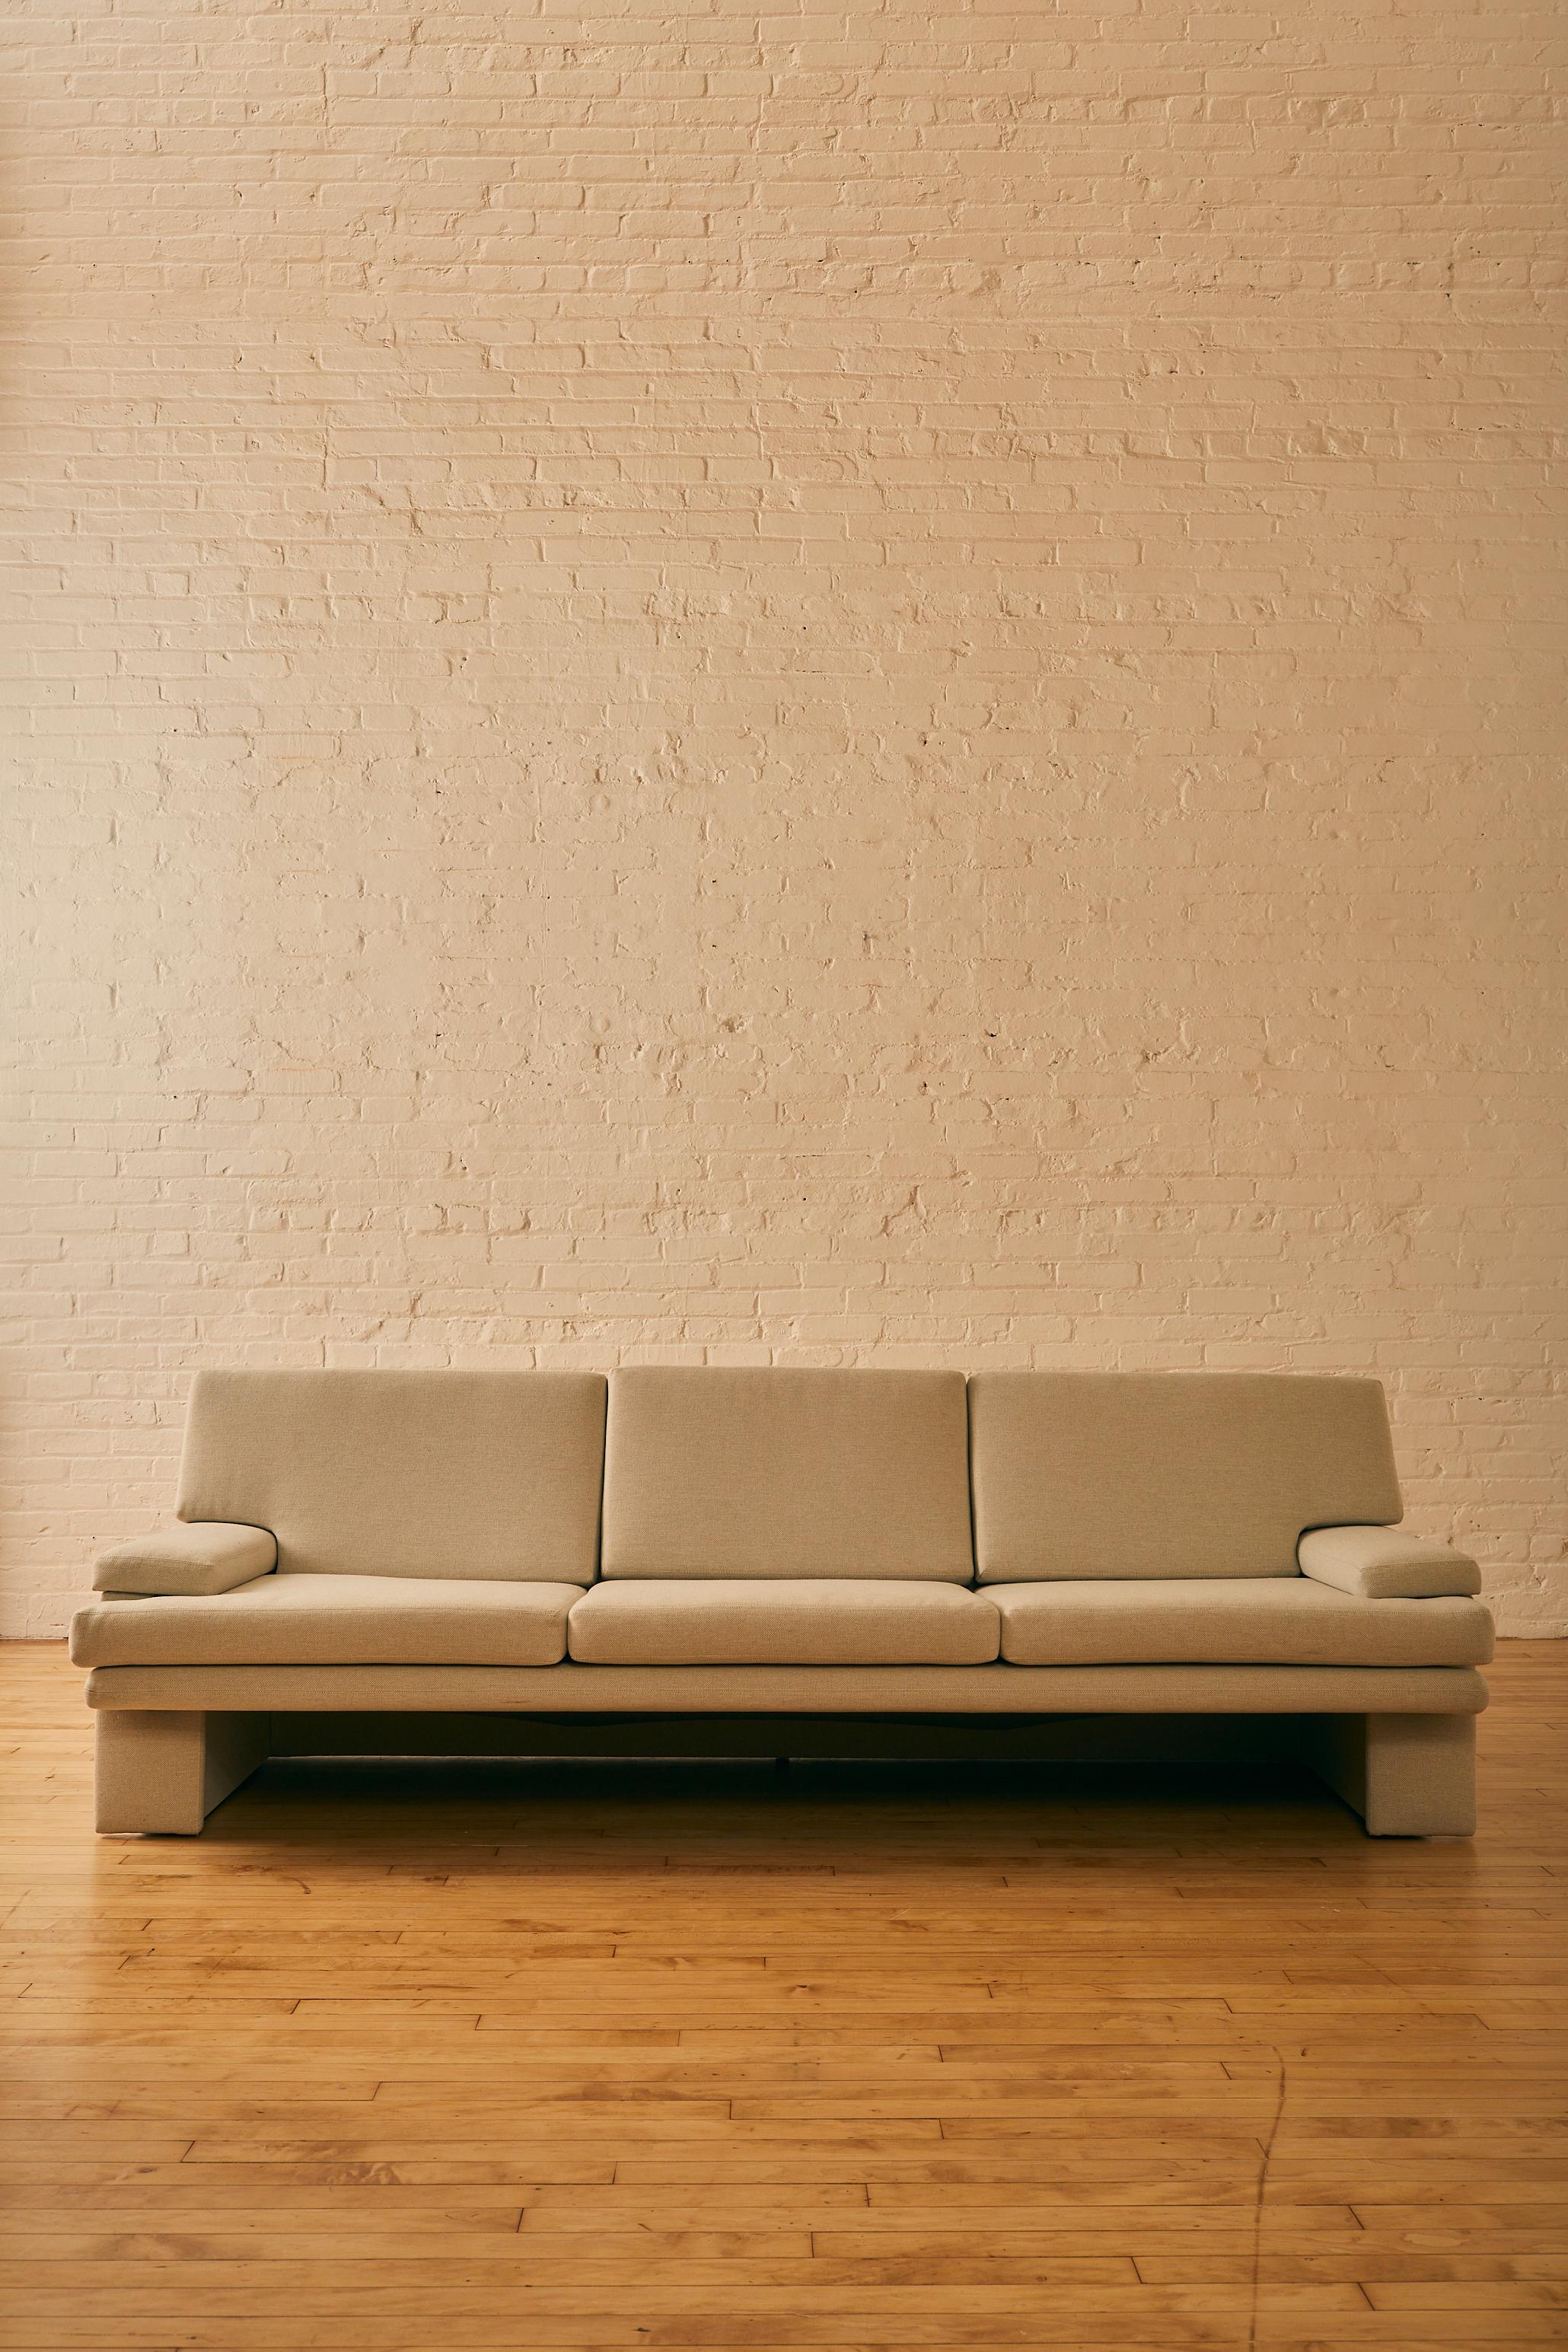 Rectangular Modernist Sofa in herringbone tweed Rogers & Goffigon upholstery. 

